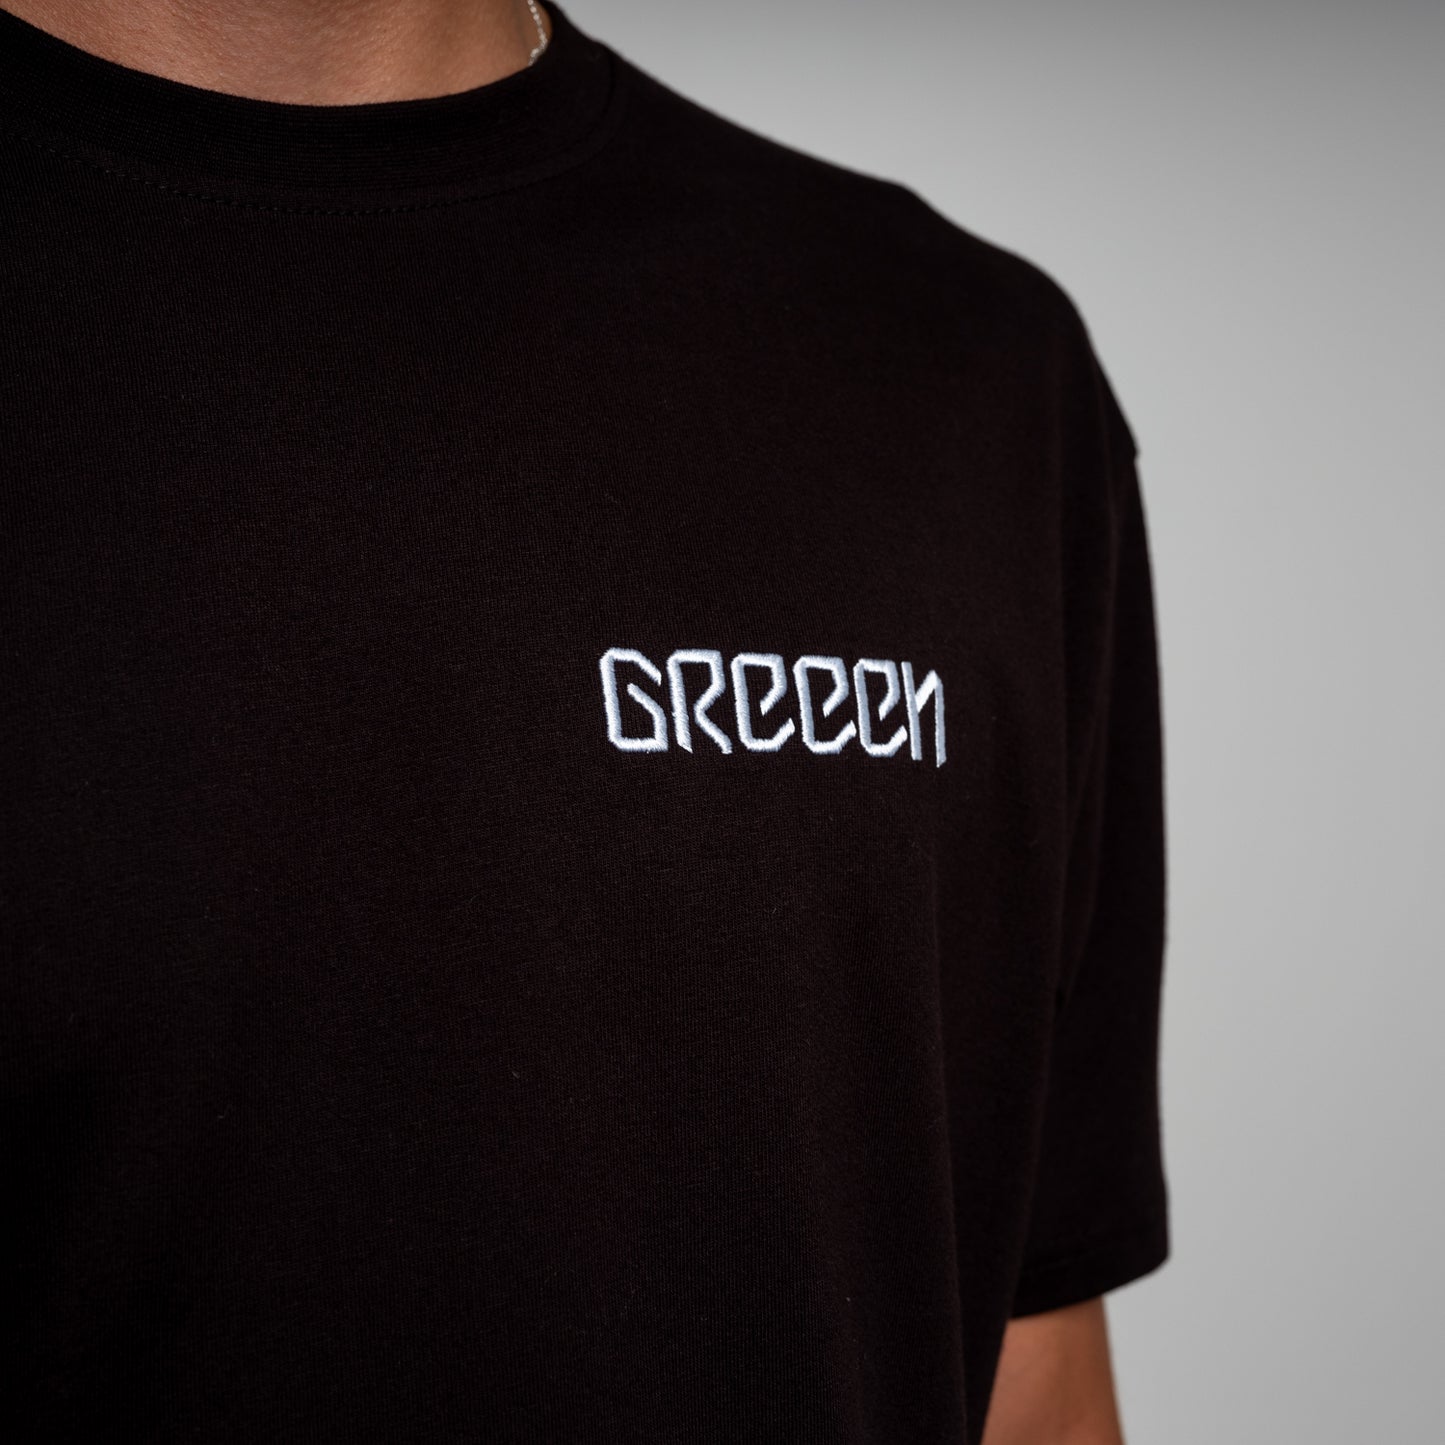 Eat Your Greeens T-Shirt Black